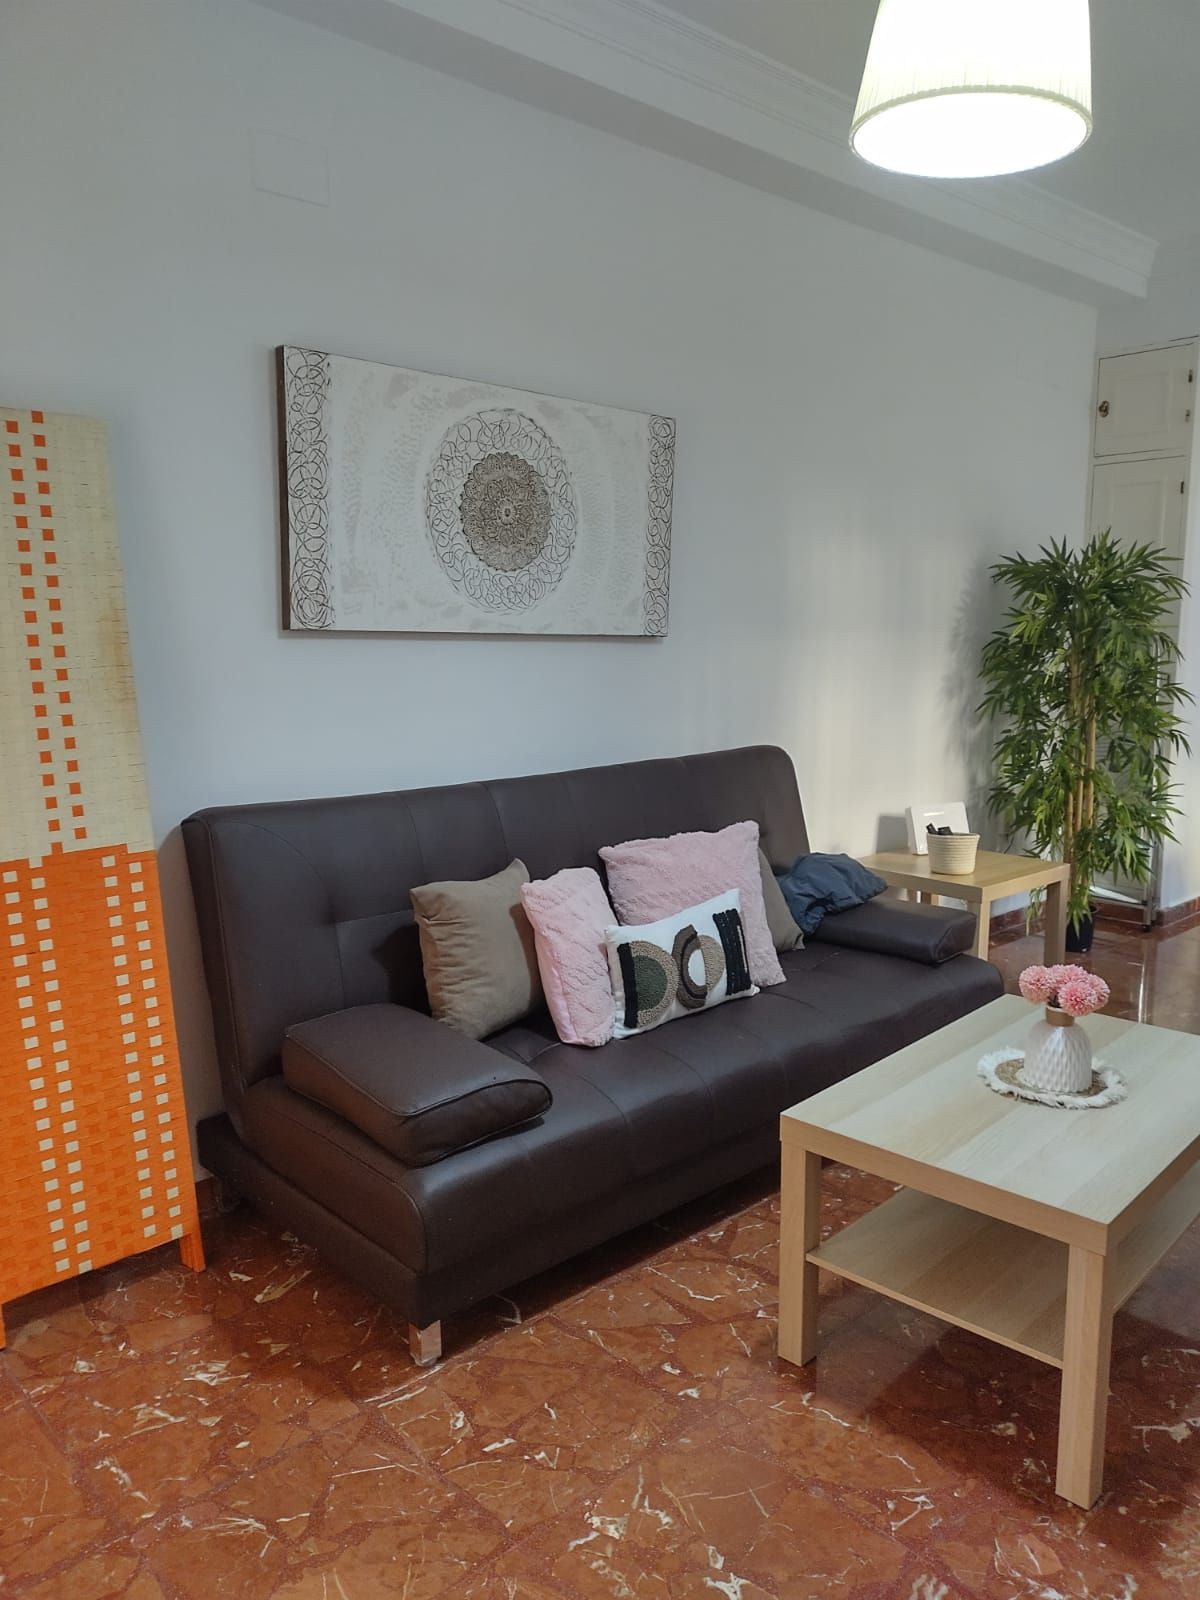 						Apartamento  Planta Baja
													en venta 
																			 en Benalmadena
					